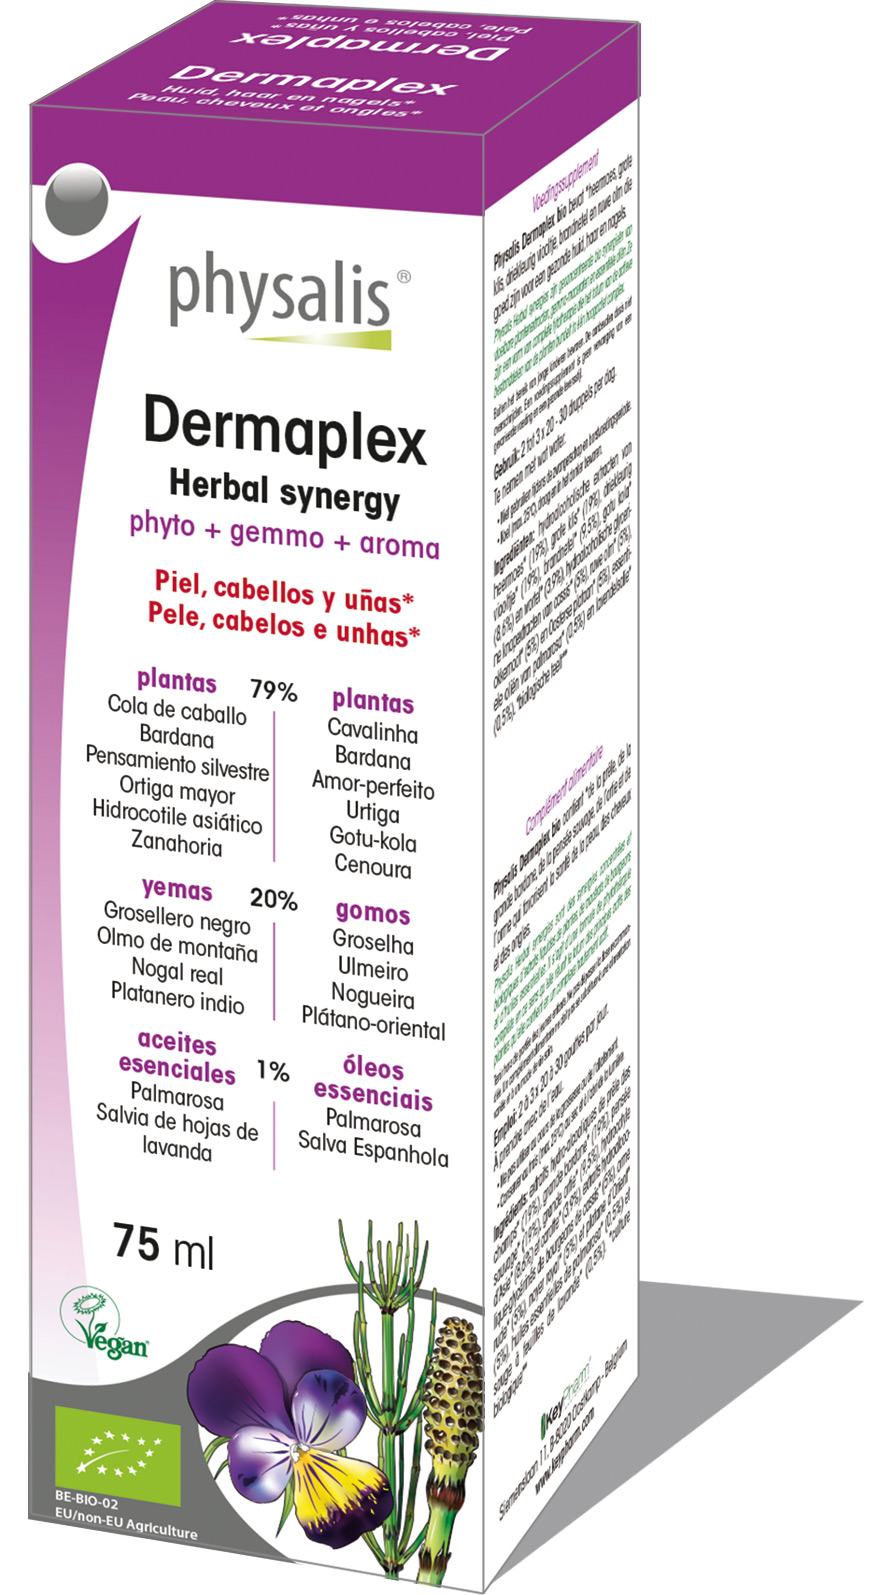 Dermaplex - Herbal synergy